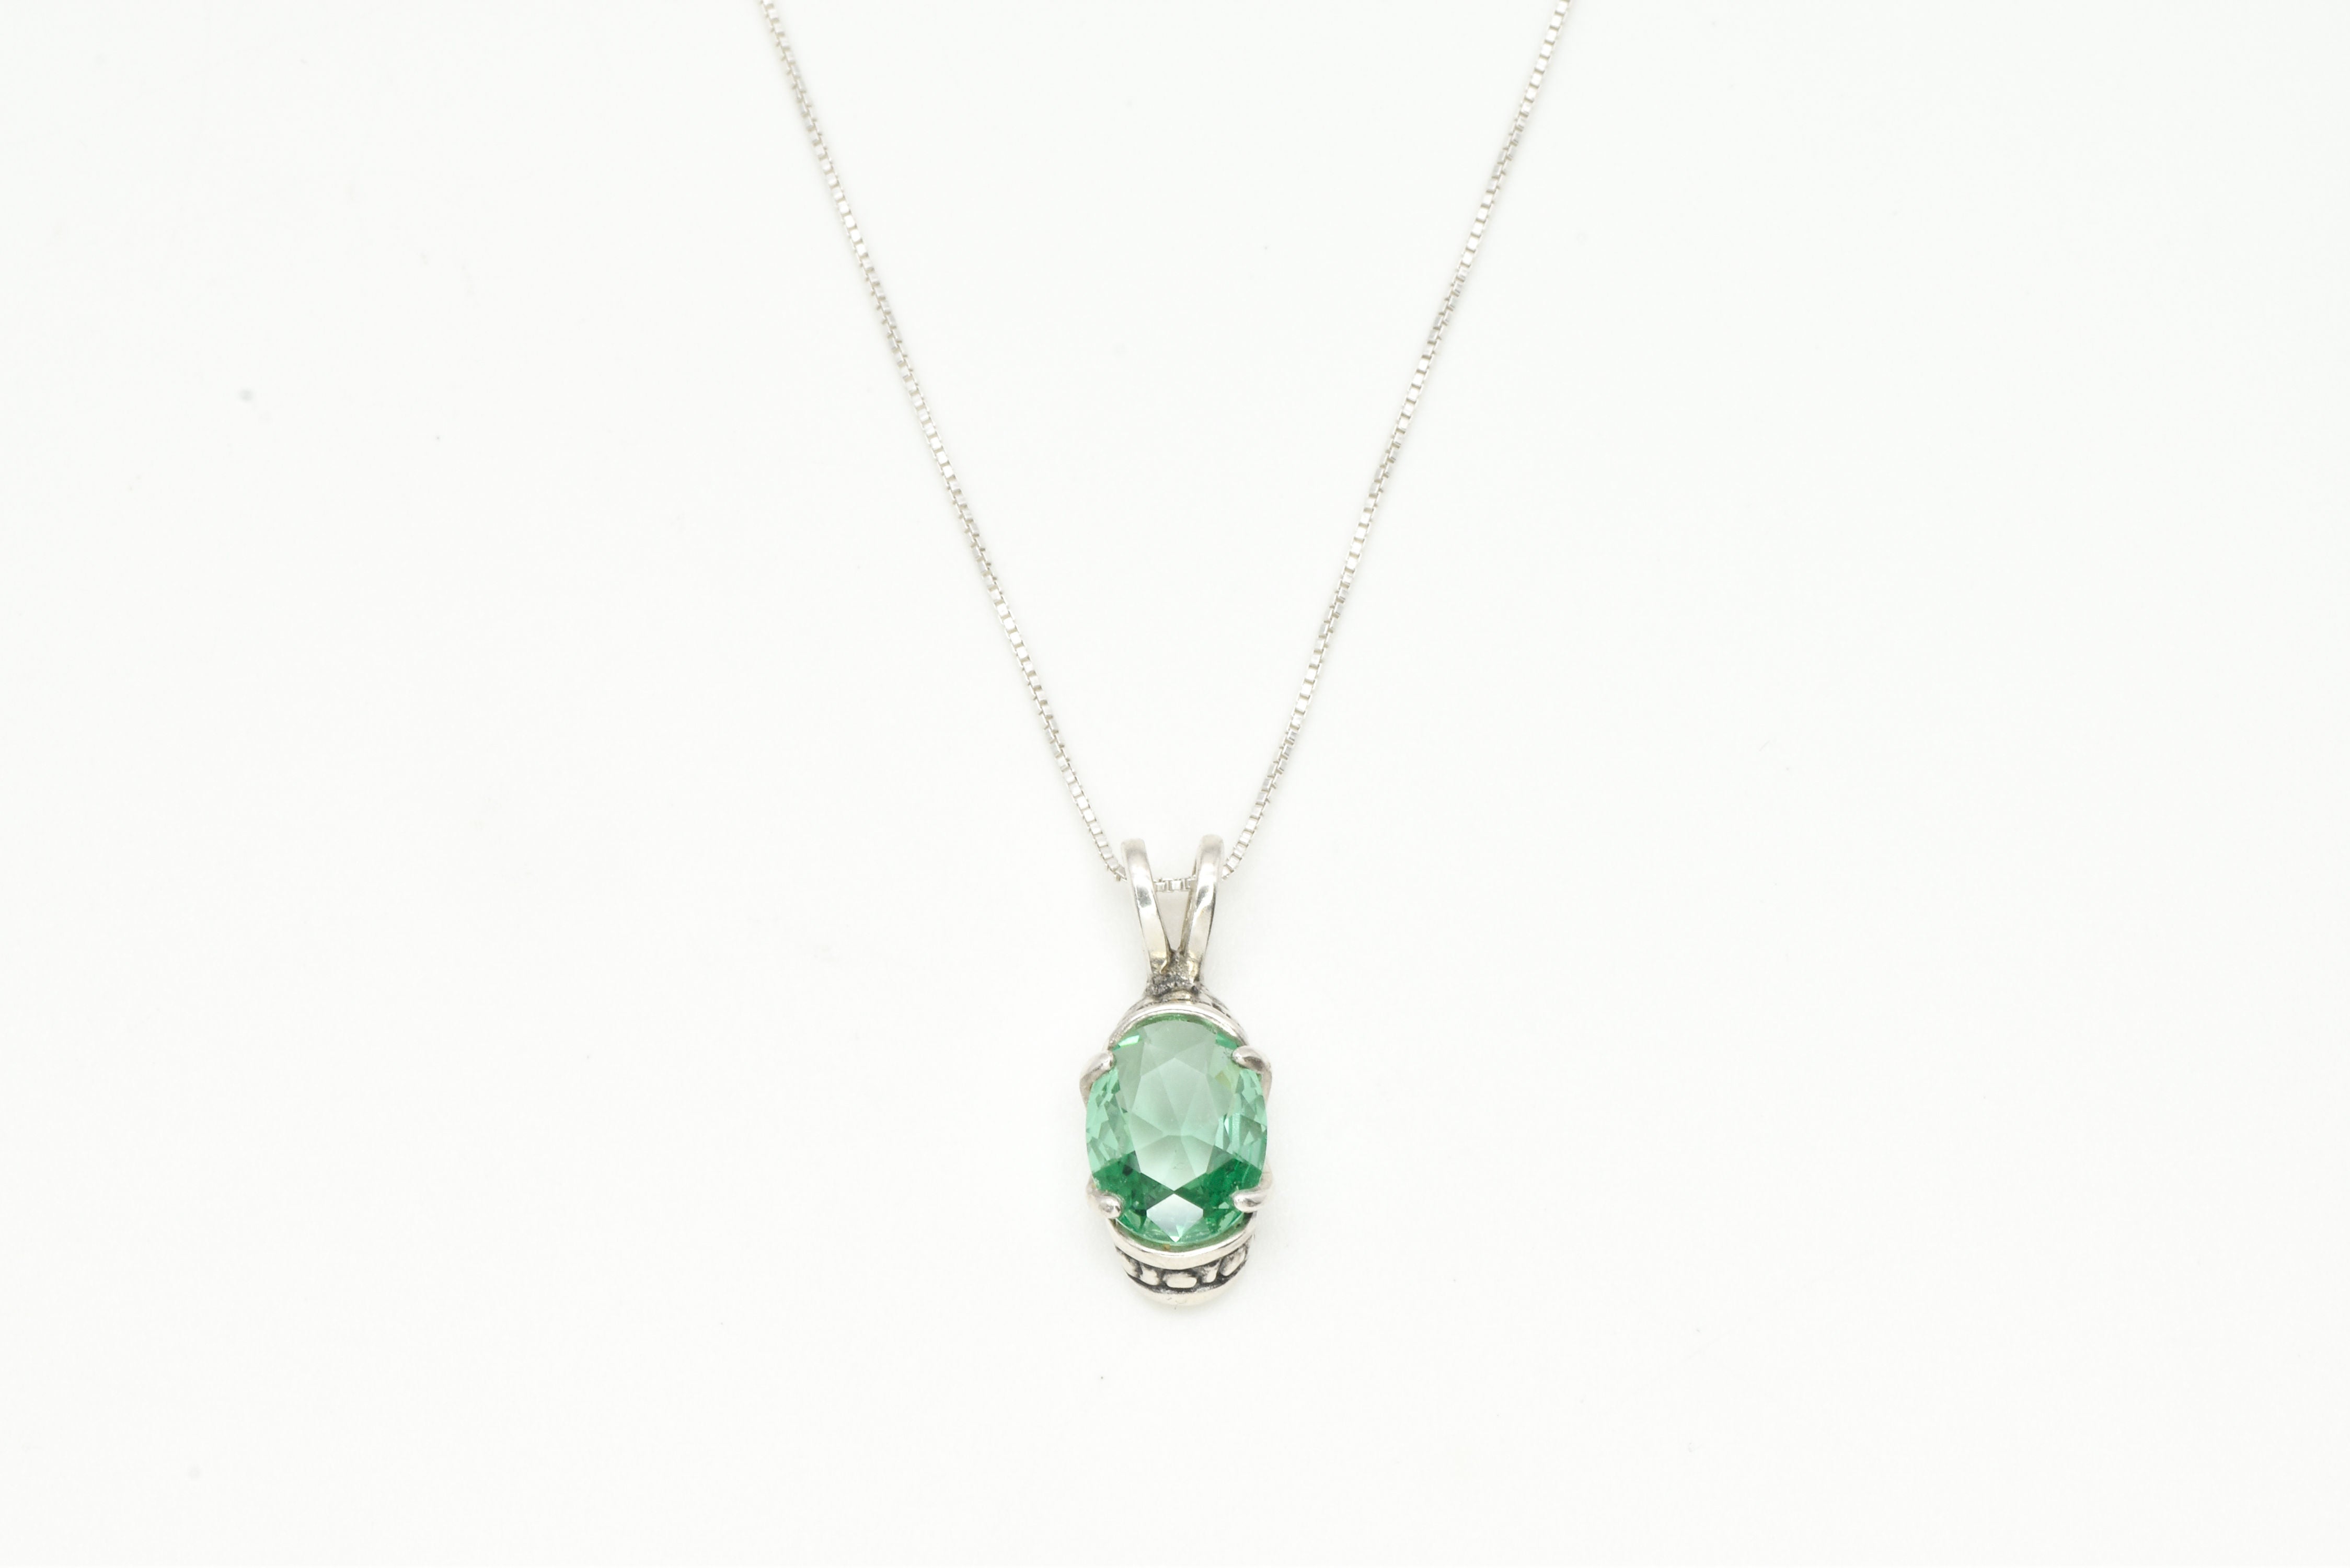 Mint Emerald Pendant, Created Mint Emerald Pendant, Green Solitaire Necklace